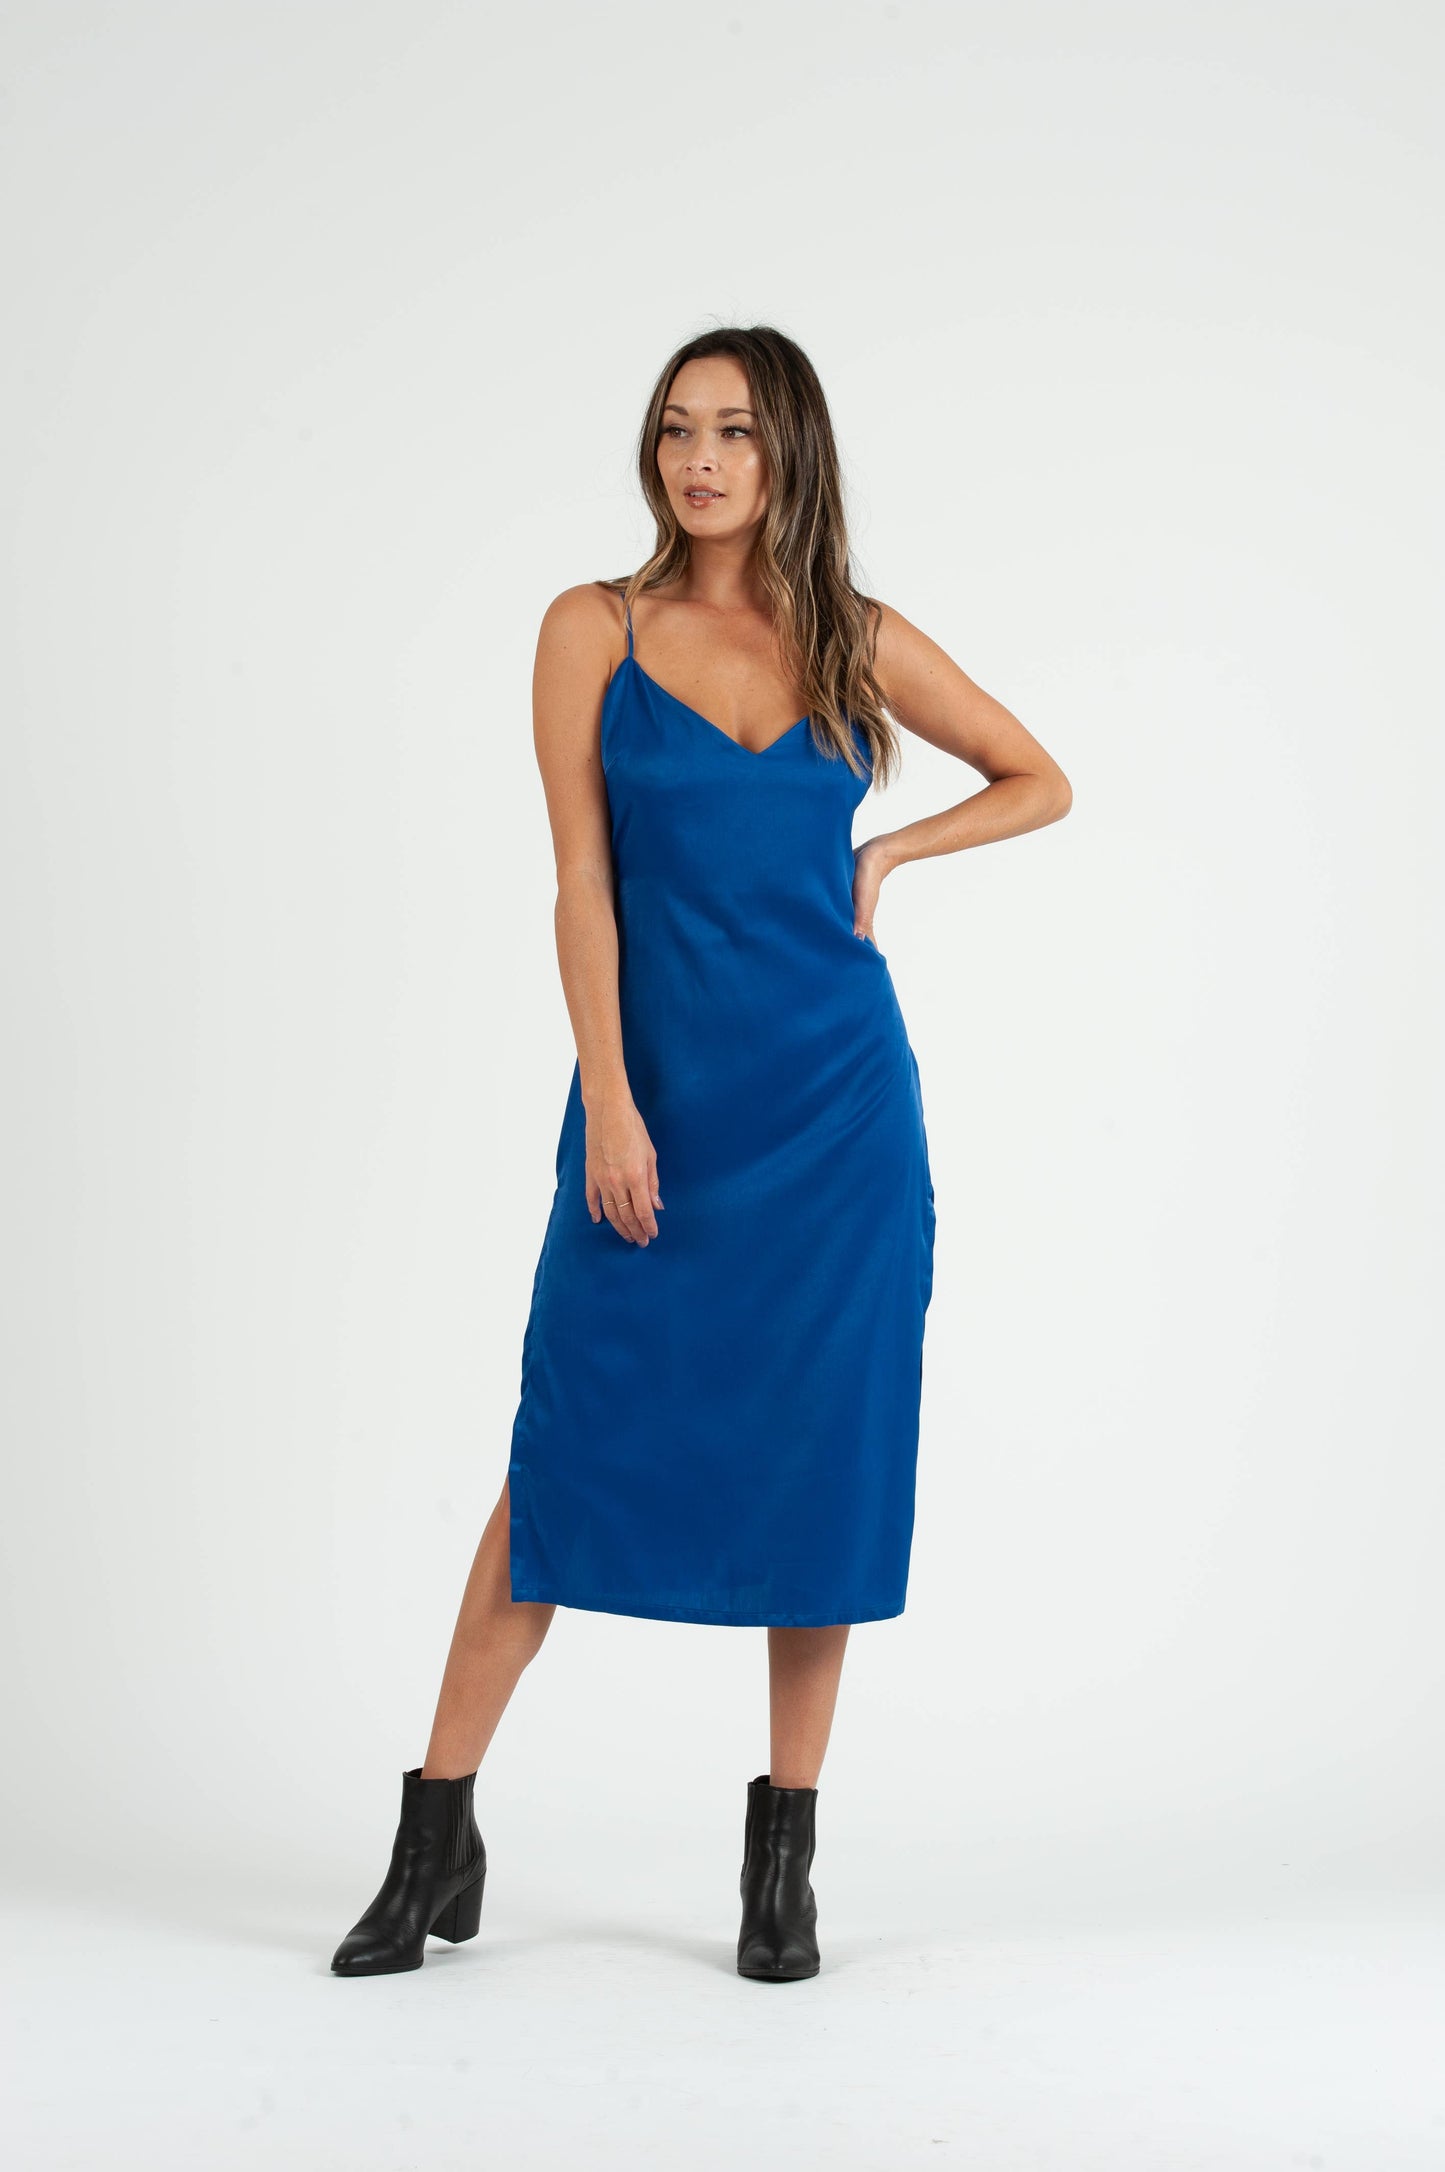 Sierra Satin Back Tie Dress - ROYAL BLUE